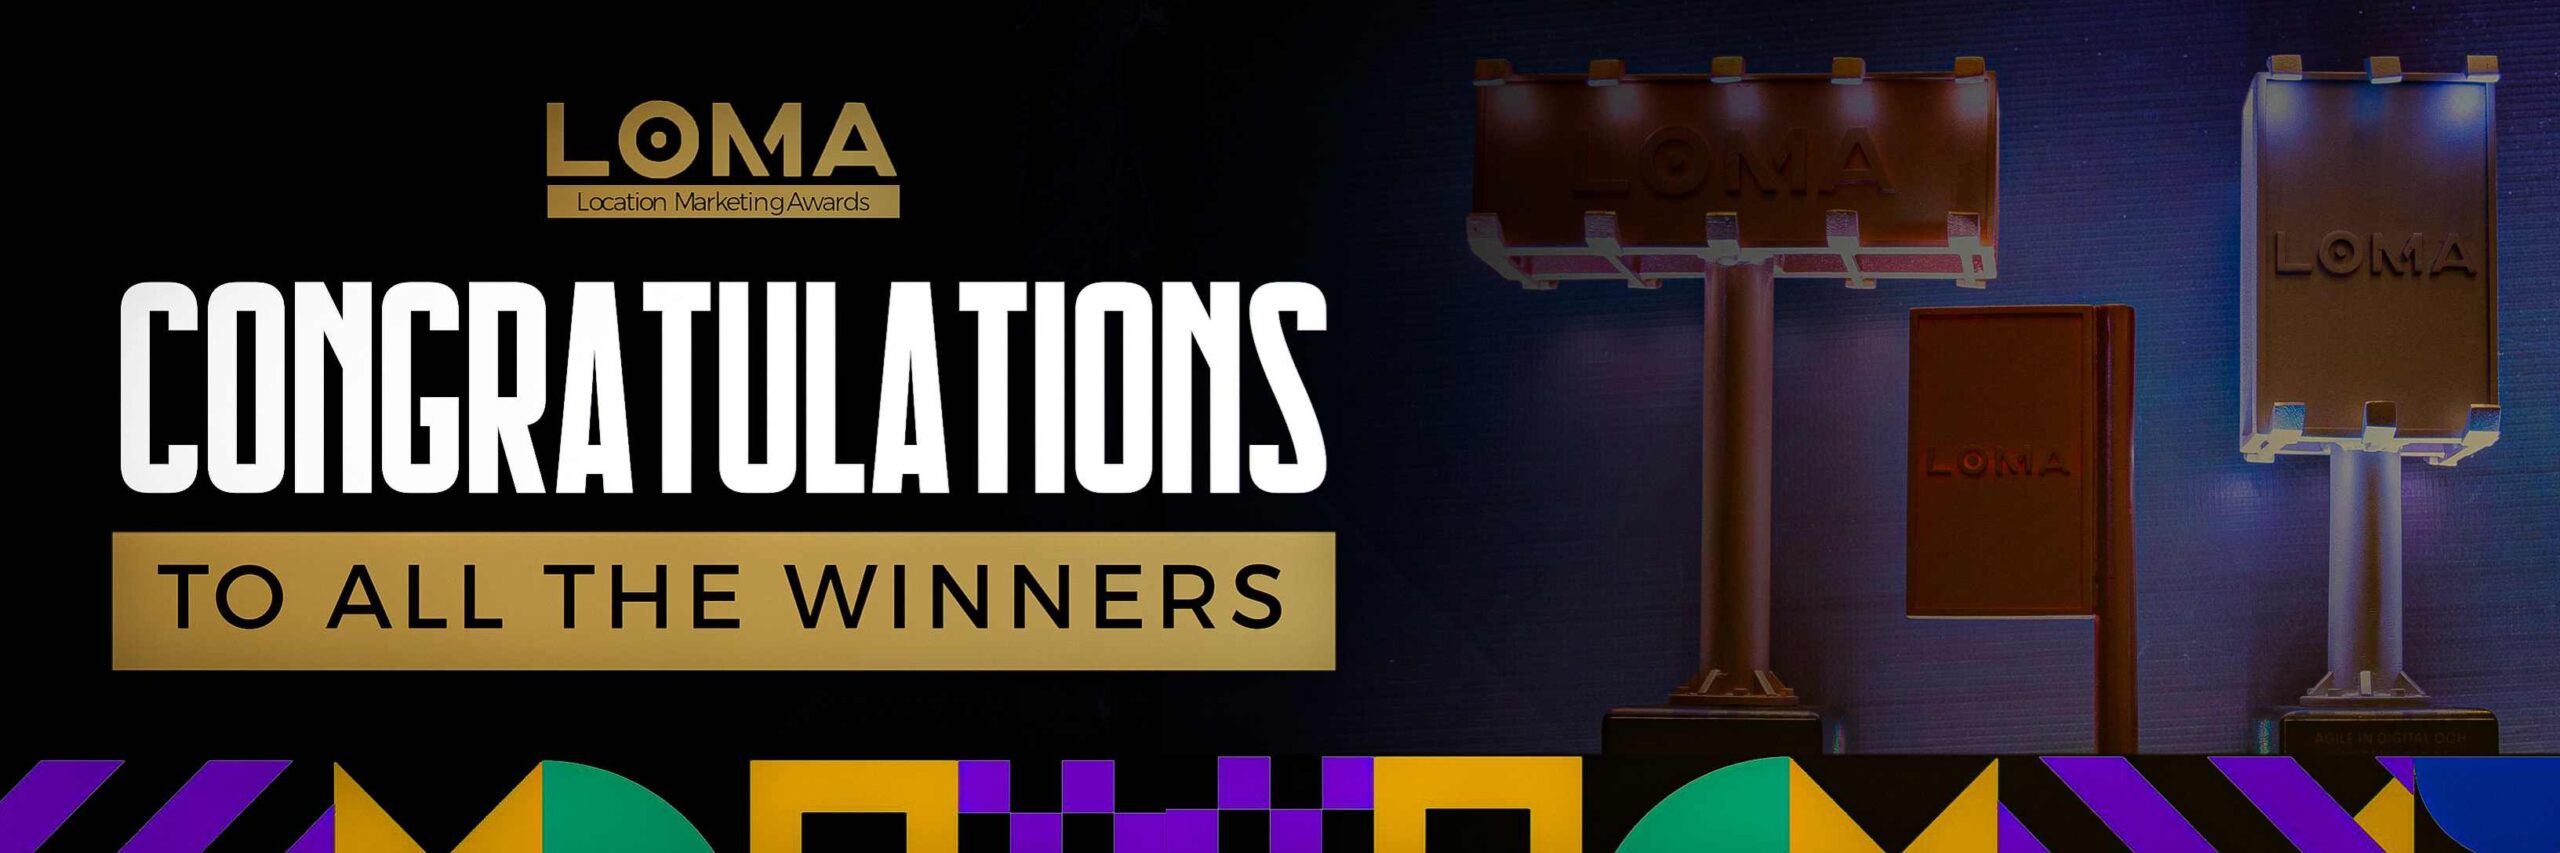 LOMA congratulates winners